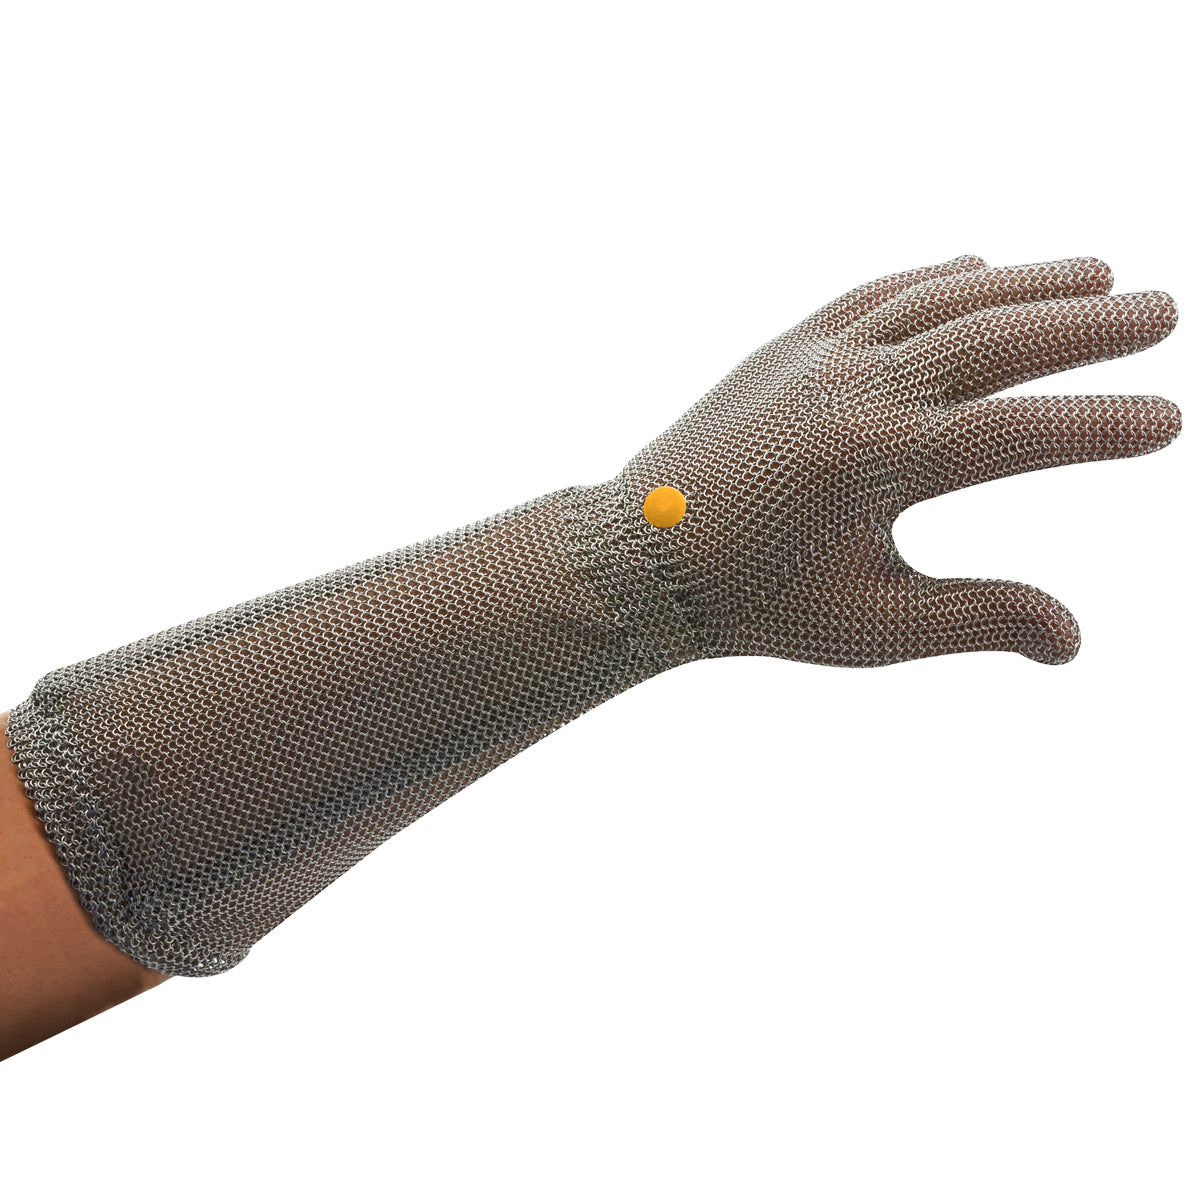 Manulatex Manulatex Mesh Wilco Flex 20cm Left Hand Glove XL - Each Safety & PPE  